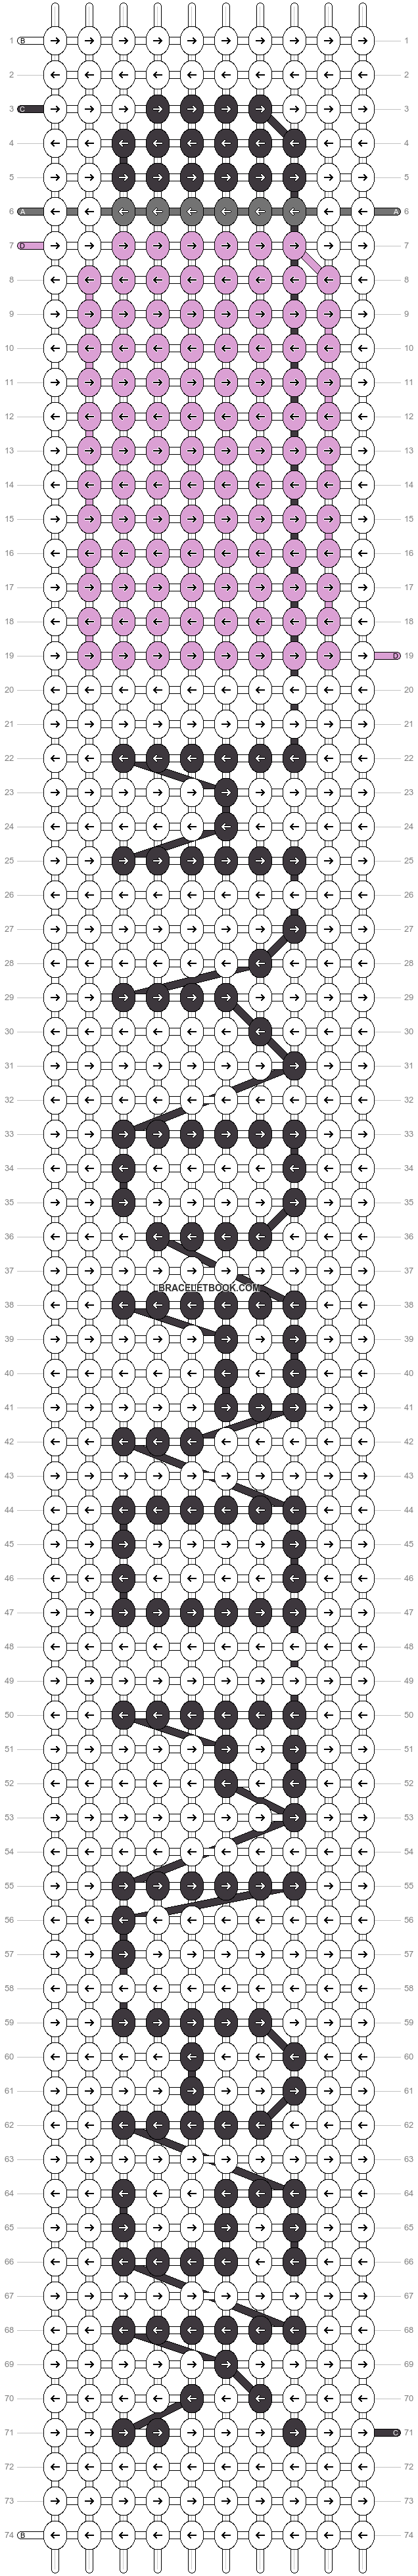 Alpha pattern #27828 variation #13506 pattern